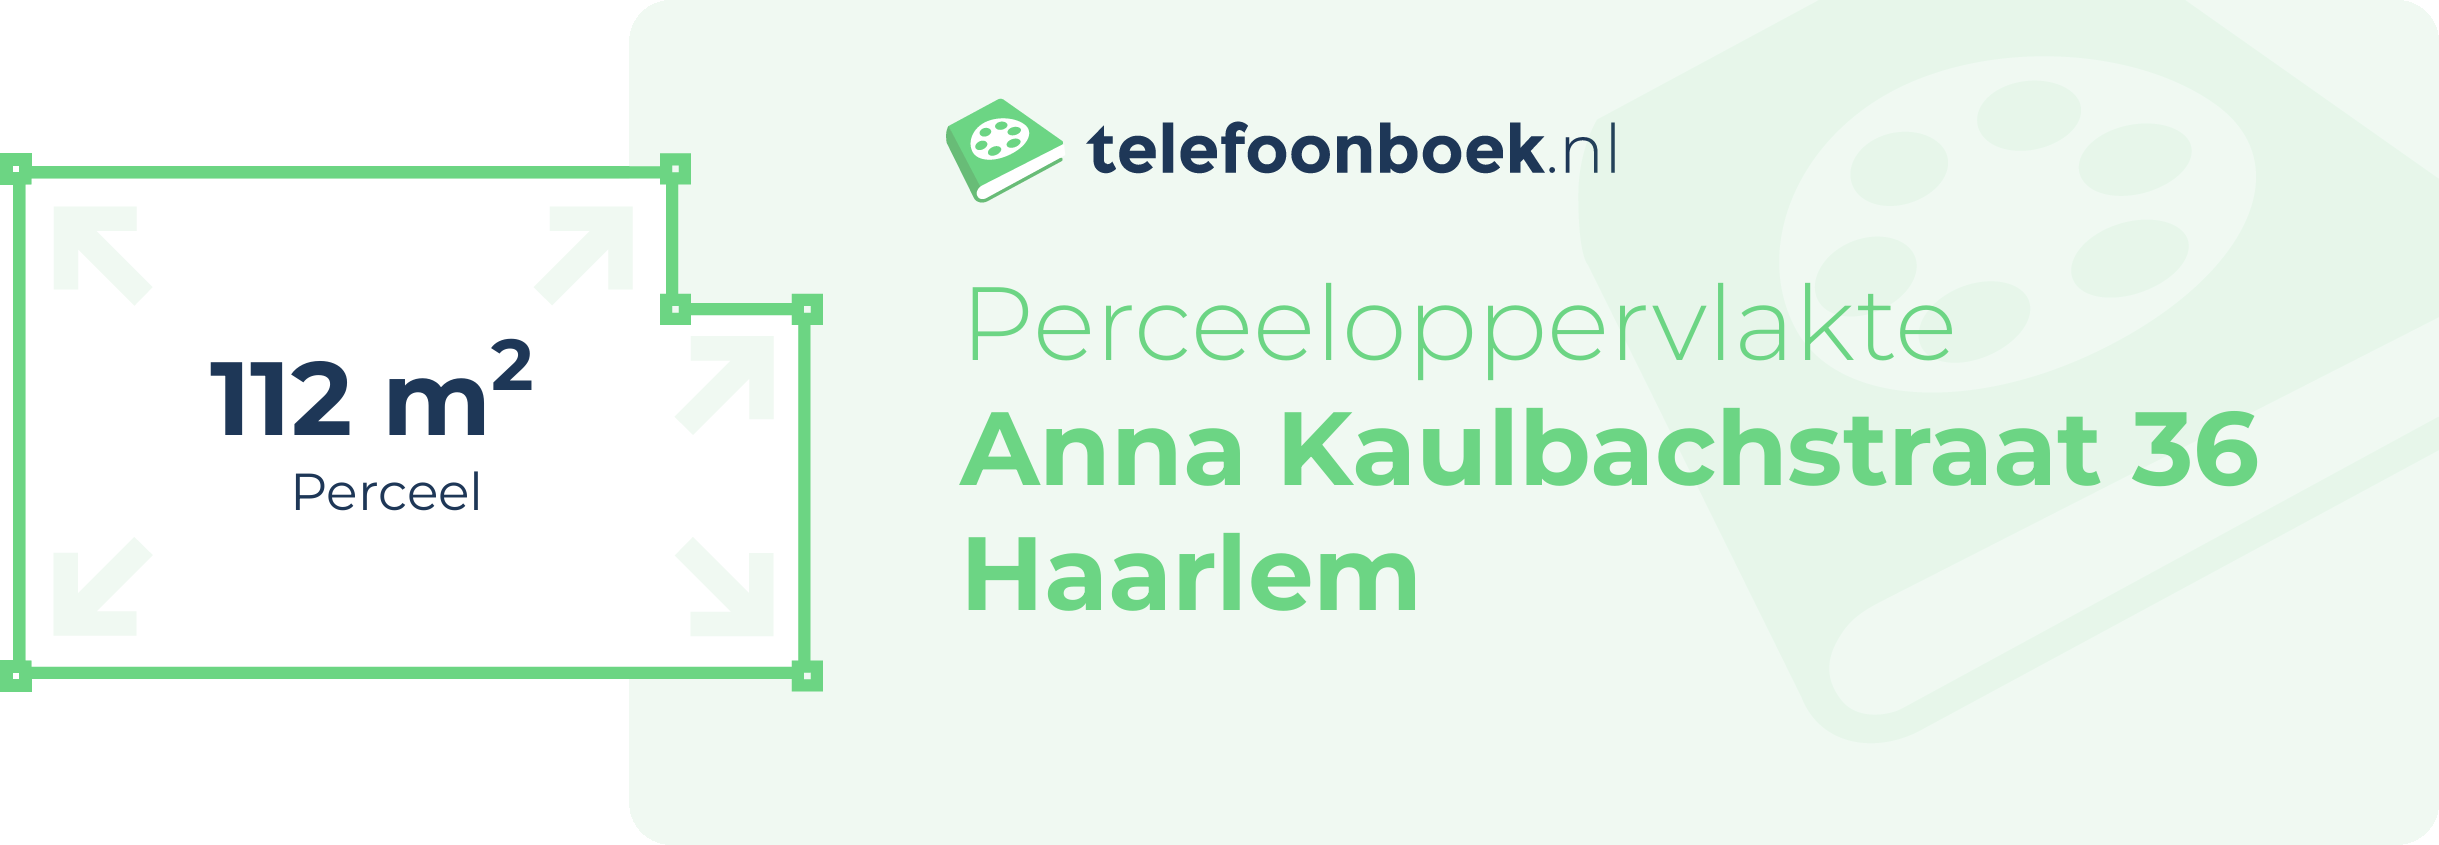 Perceeloppervlakte Anna Kaulbachstraat 36 Haarlem